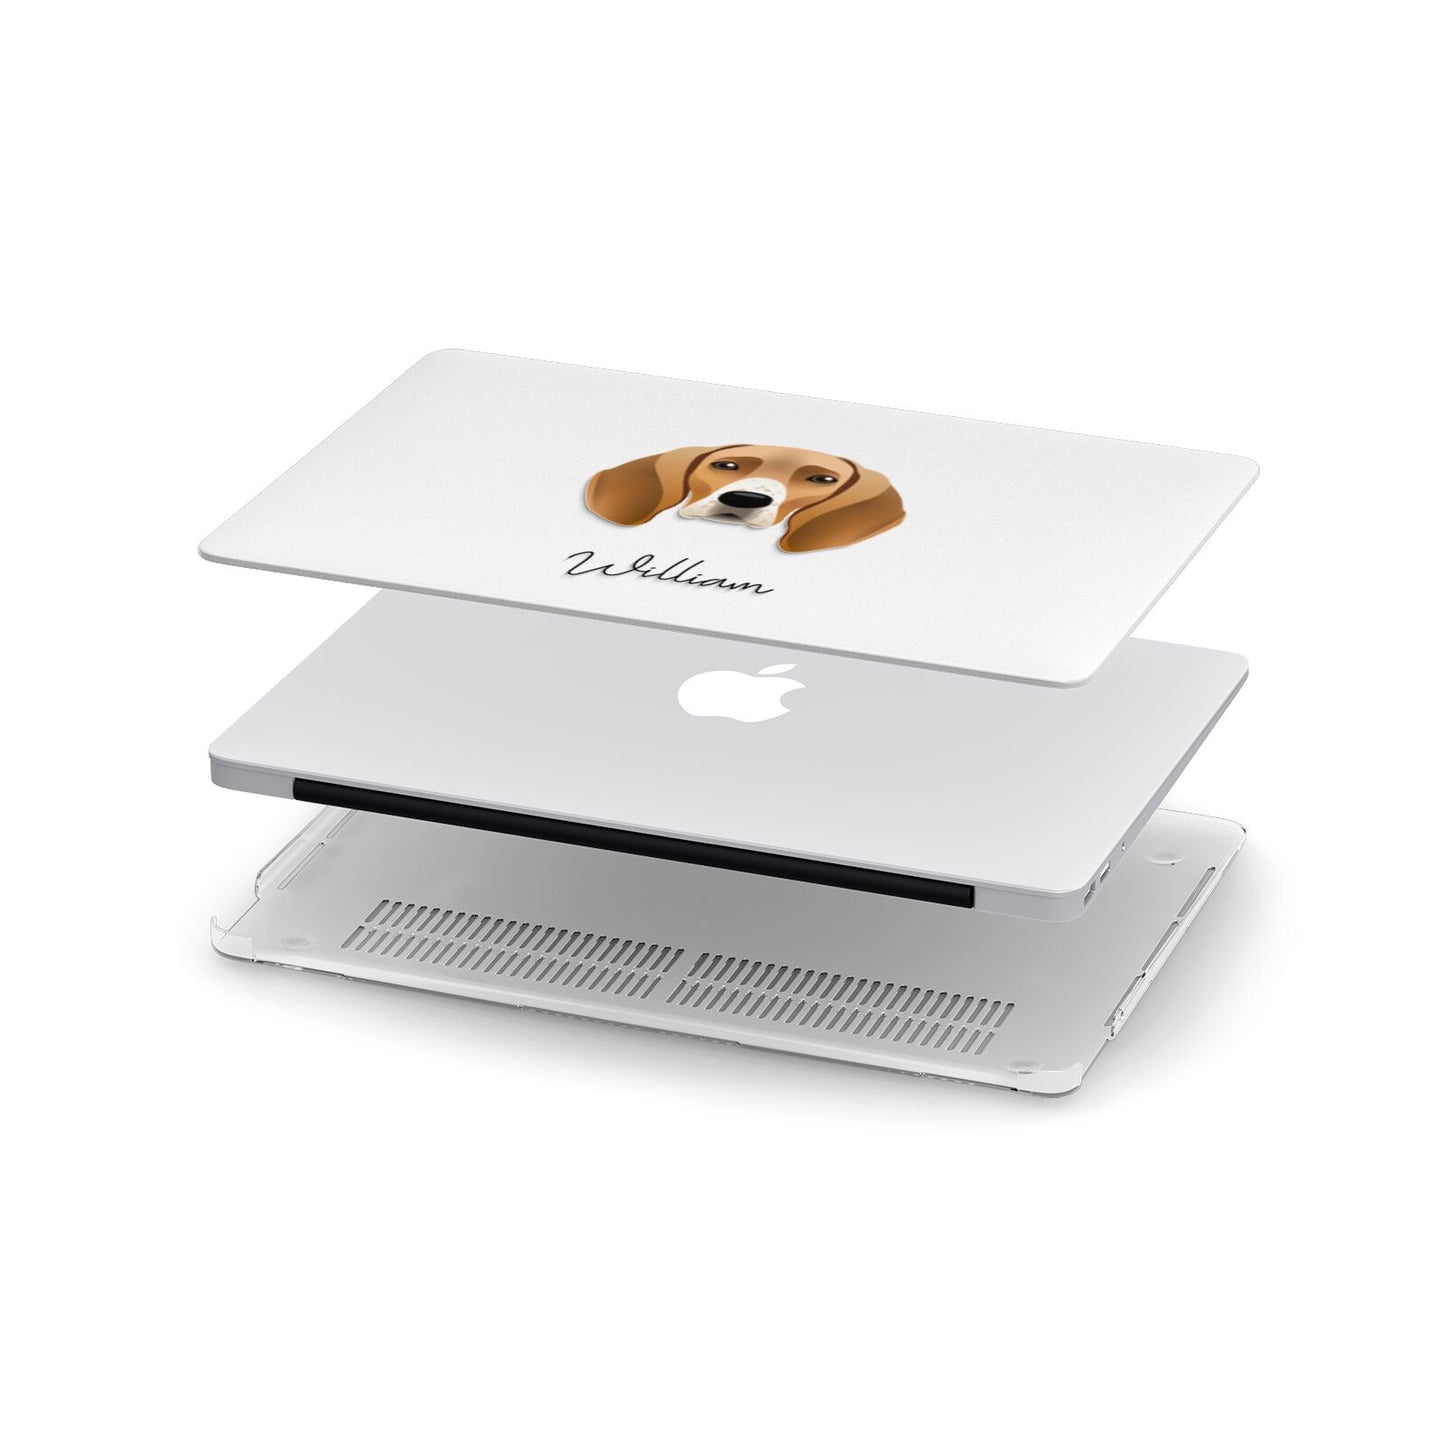 Foxhound Personalised Apple MacBook Case in Detail